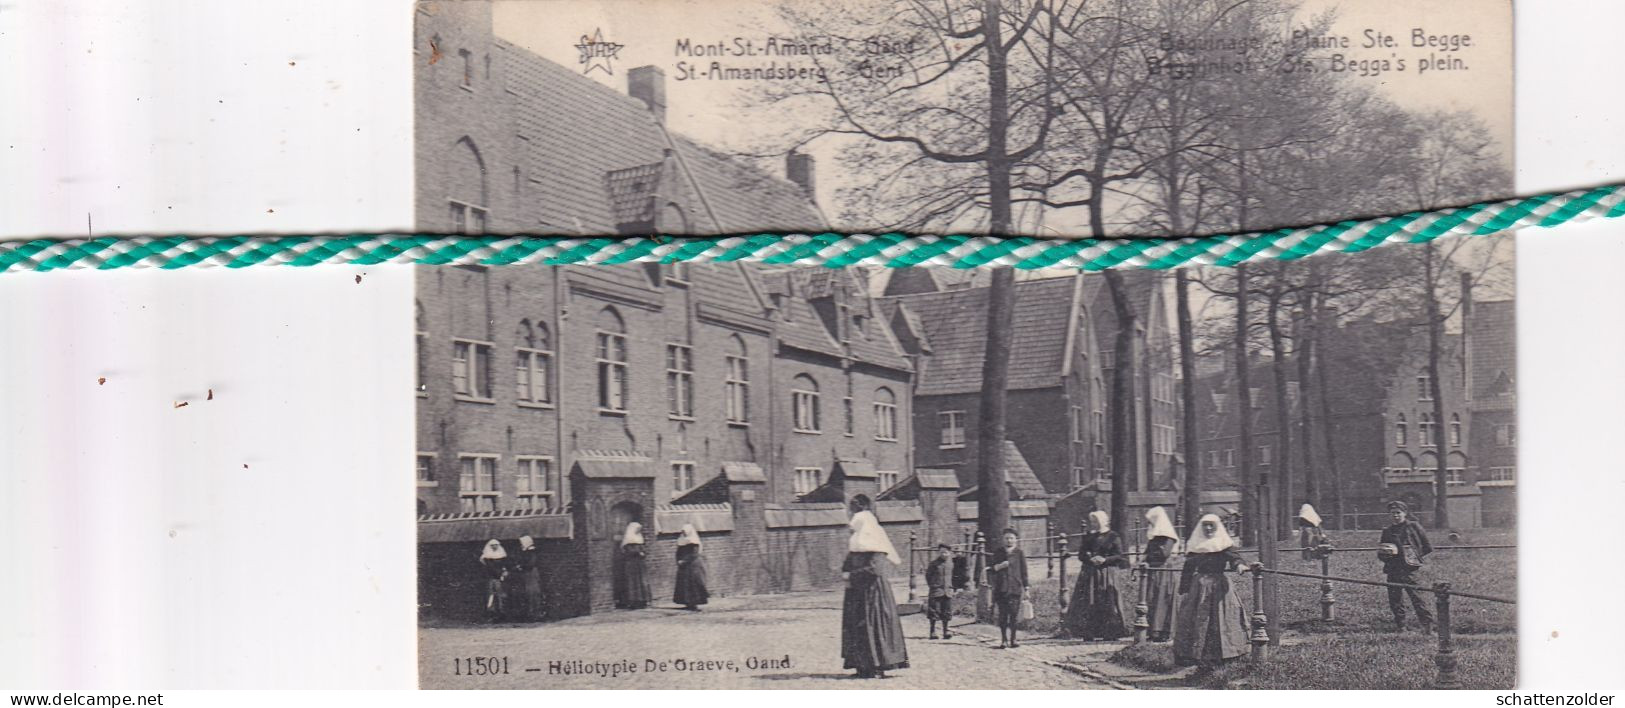 Sint-Amandsberg, Begijnhof, St, Begga's Plein - Gent